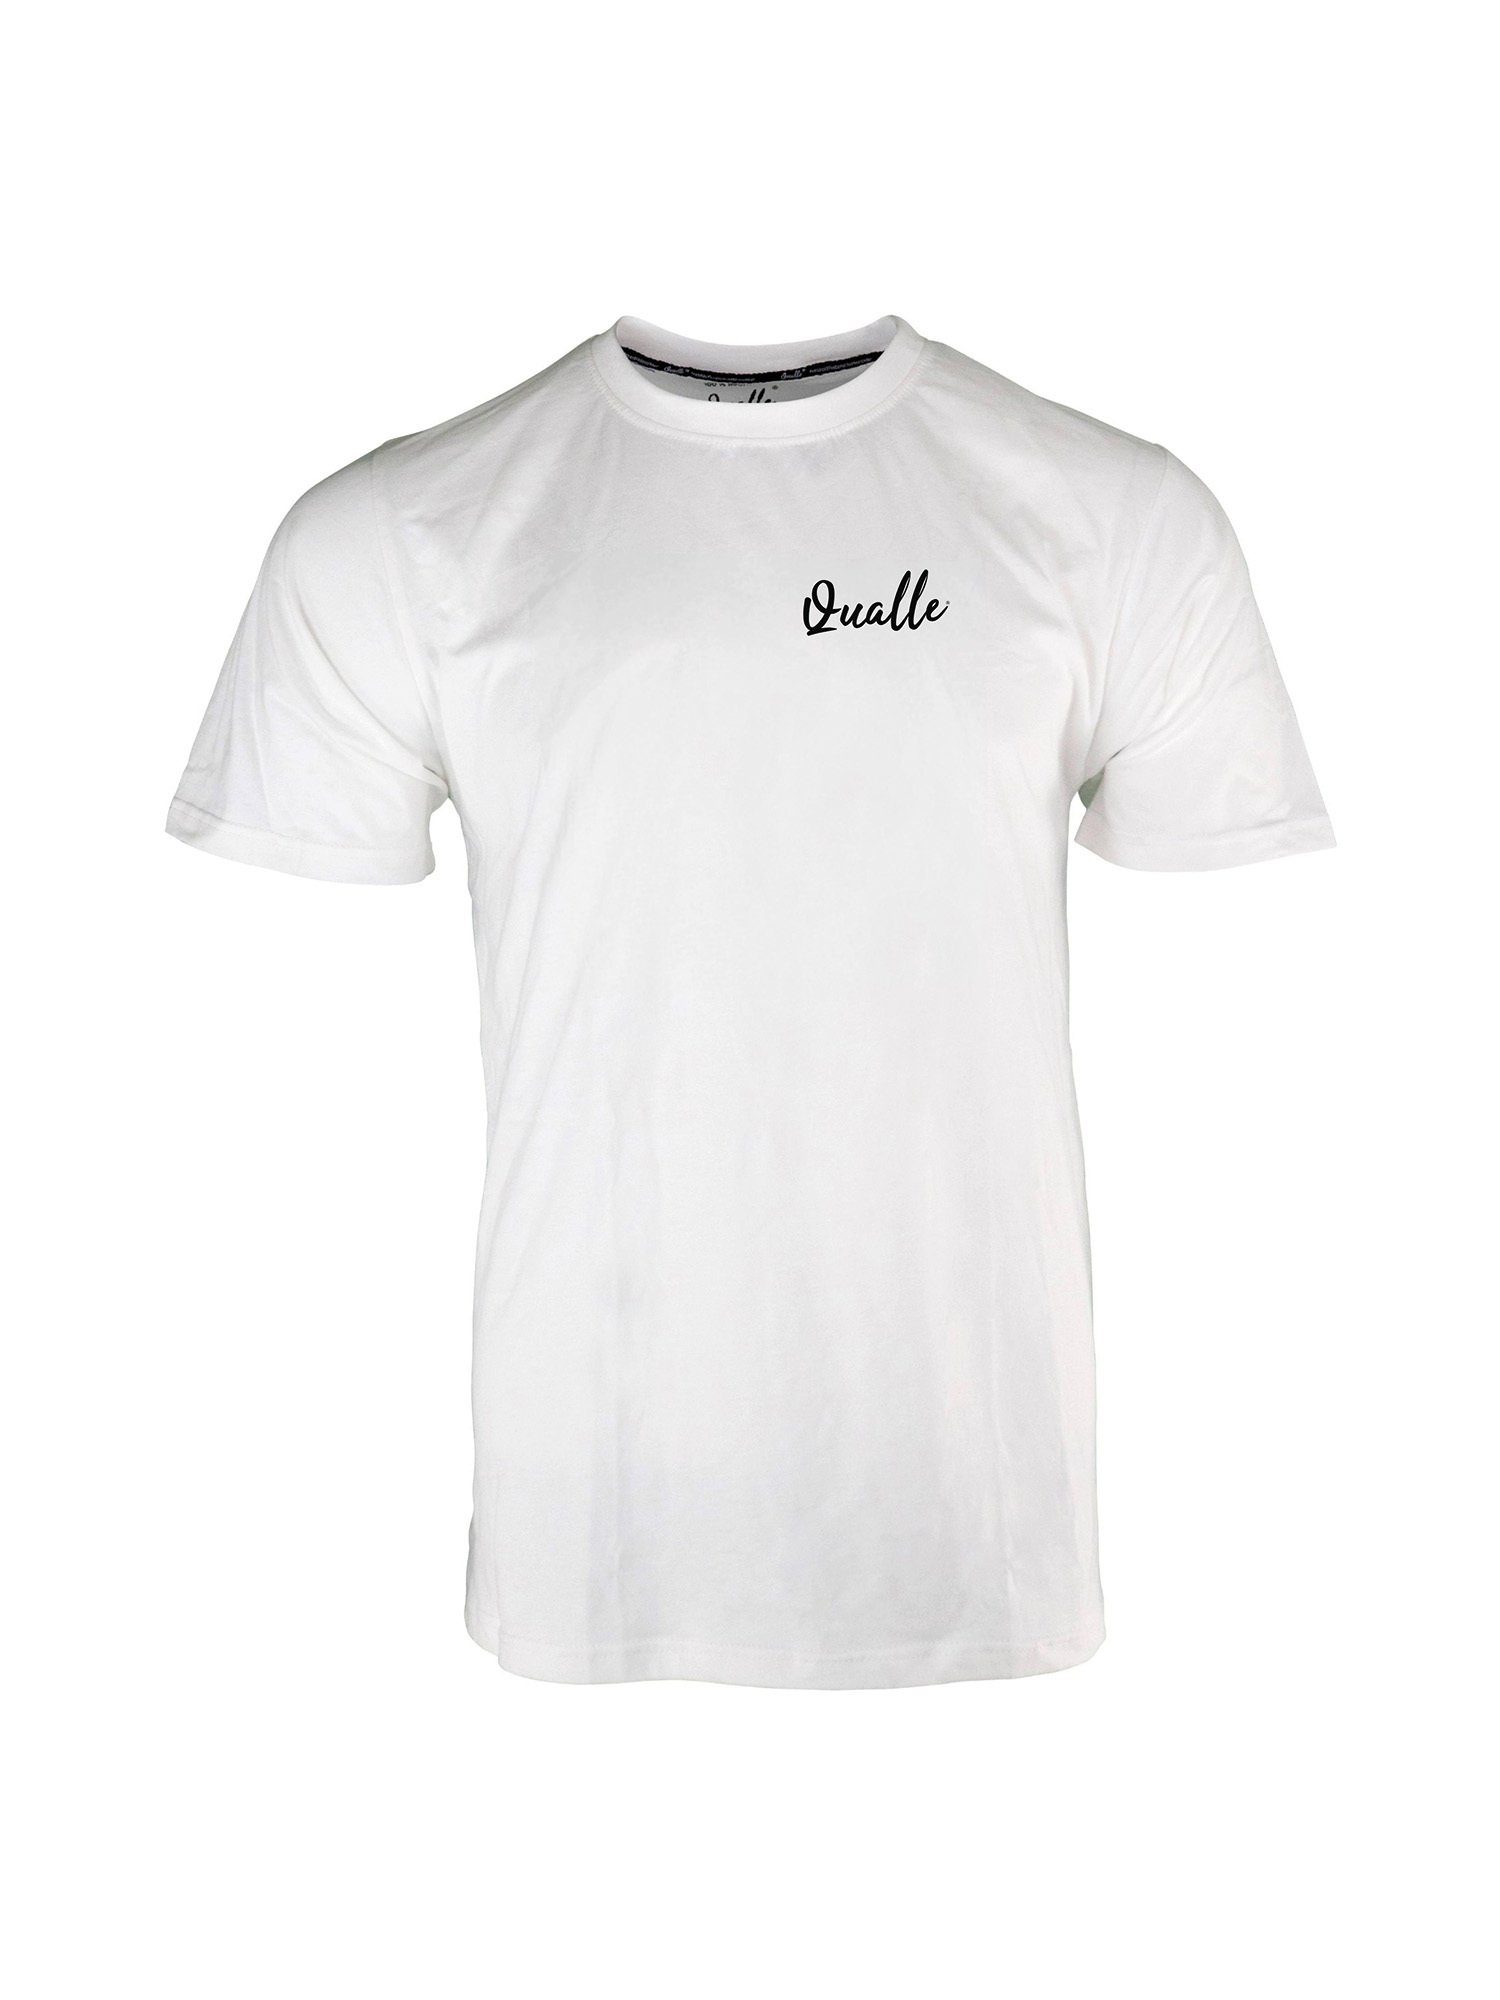 Qualle T-Shirt Streetwear Respekt Unisex, aus Baumwolle